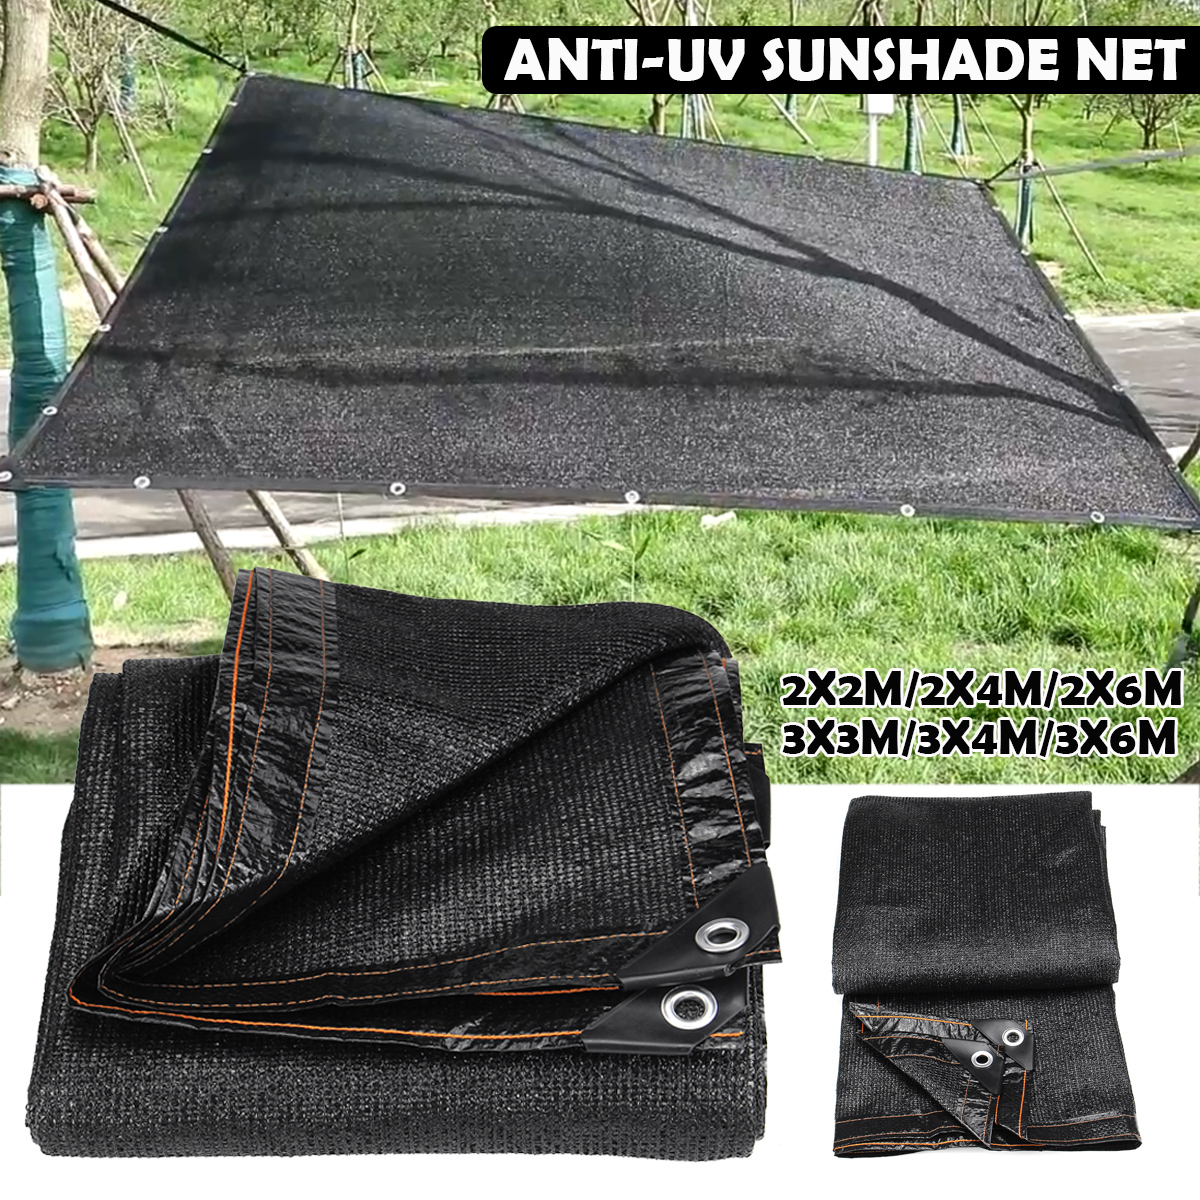 Anti-UV-Sunshade-Net-Garden-Sunscreen-Sunblock-Shade-Cloth-Net-Plant-Greenhouse-Cover-Outdoor-Car-Co-1611706-2